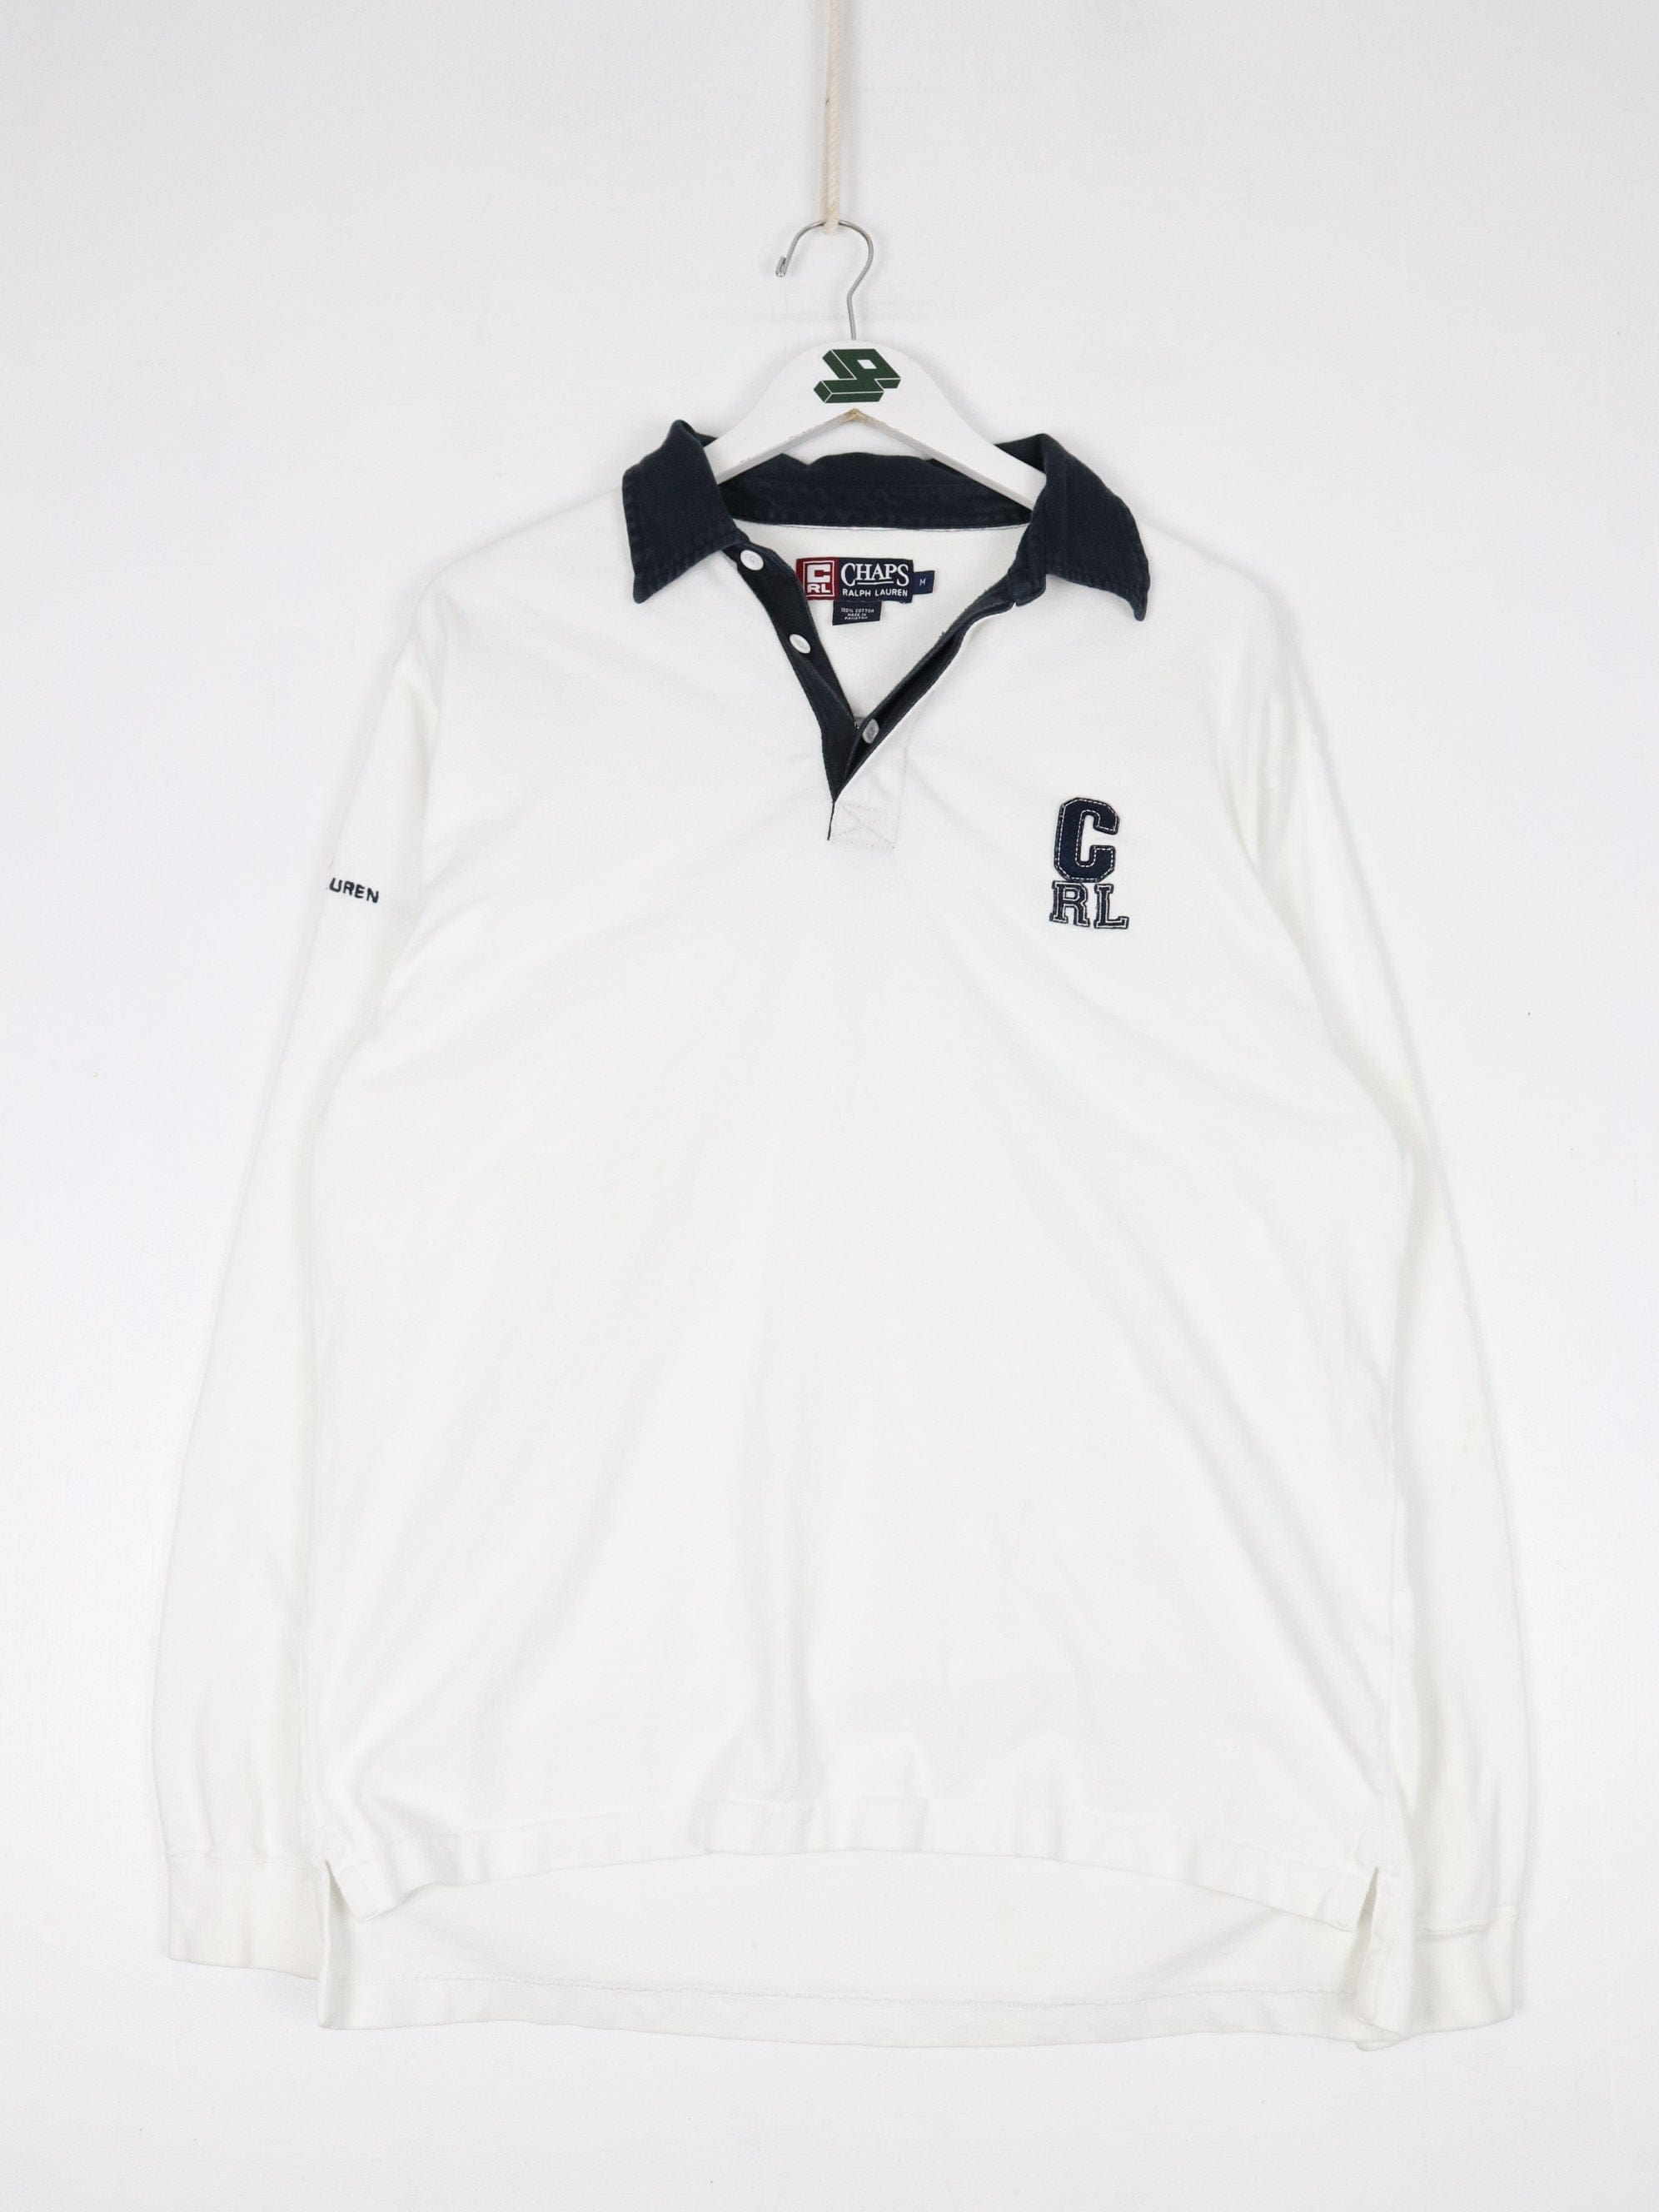 Vintage Chaps Ralph Lauren Shirt Mens Medium White Rugby – Proper Vintage